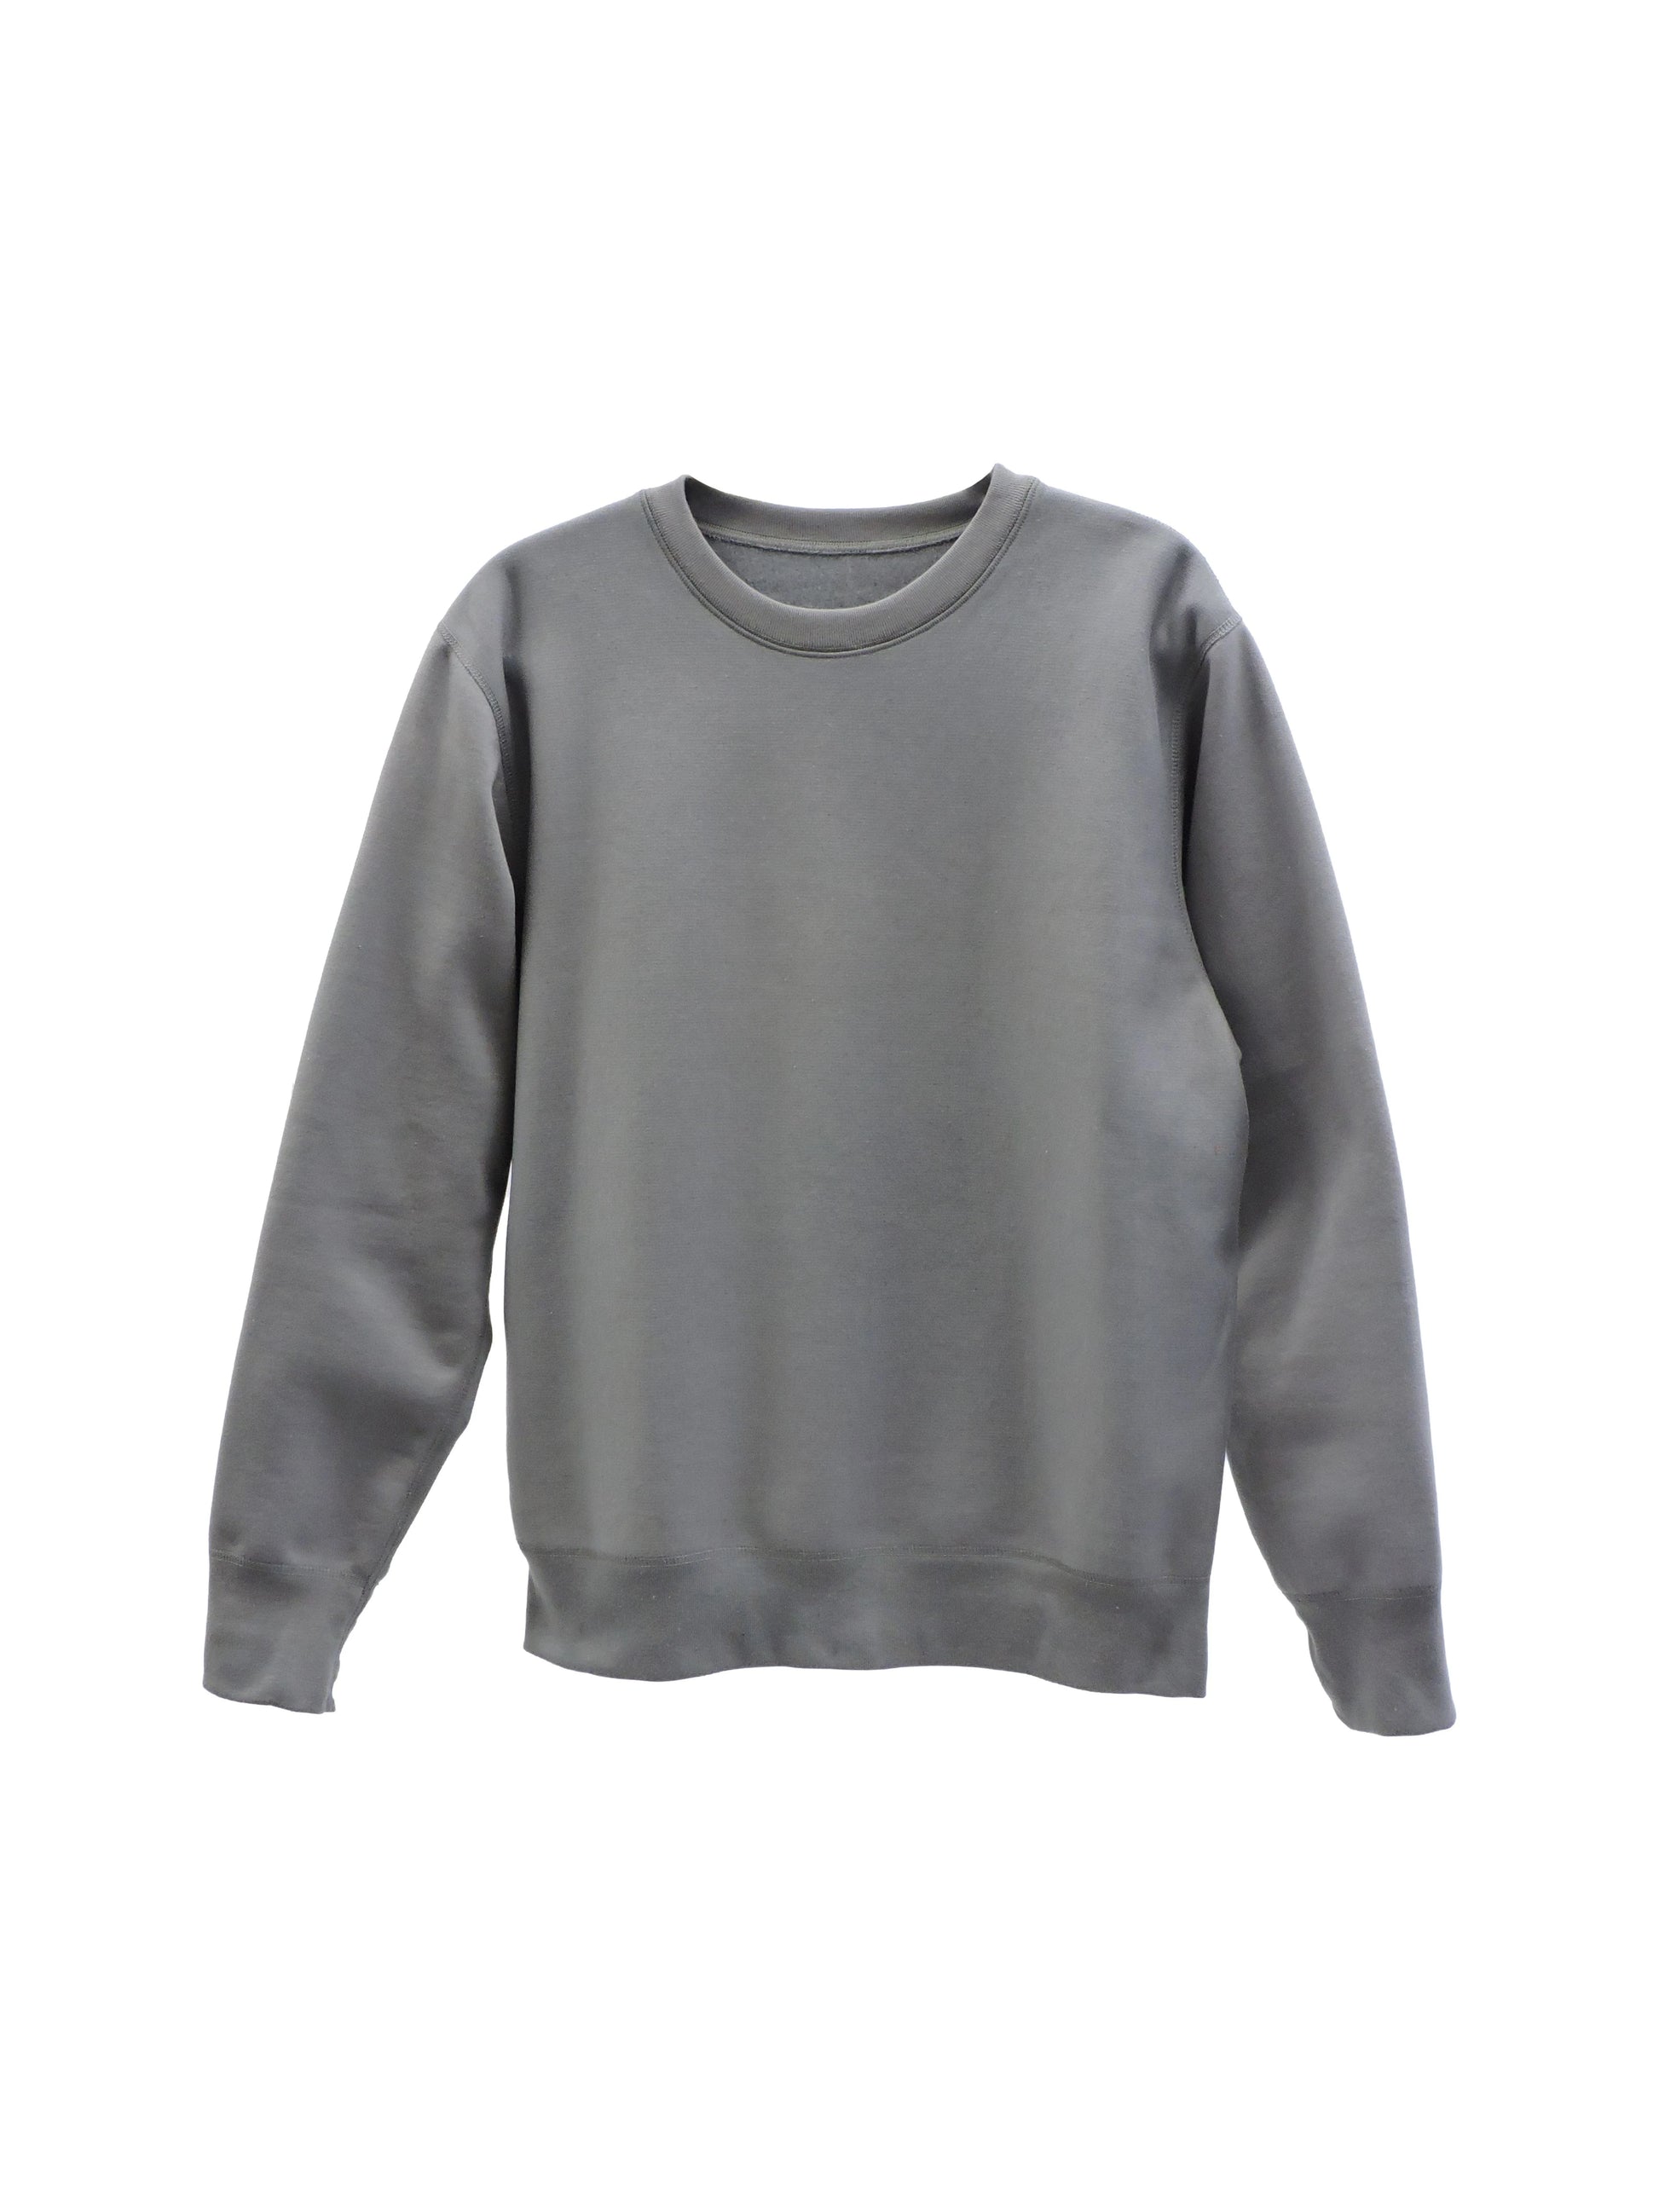 Steel Grey Fleece Crewneck Sweater